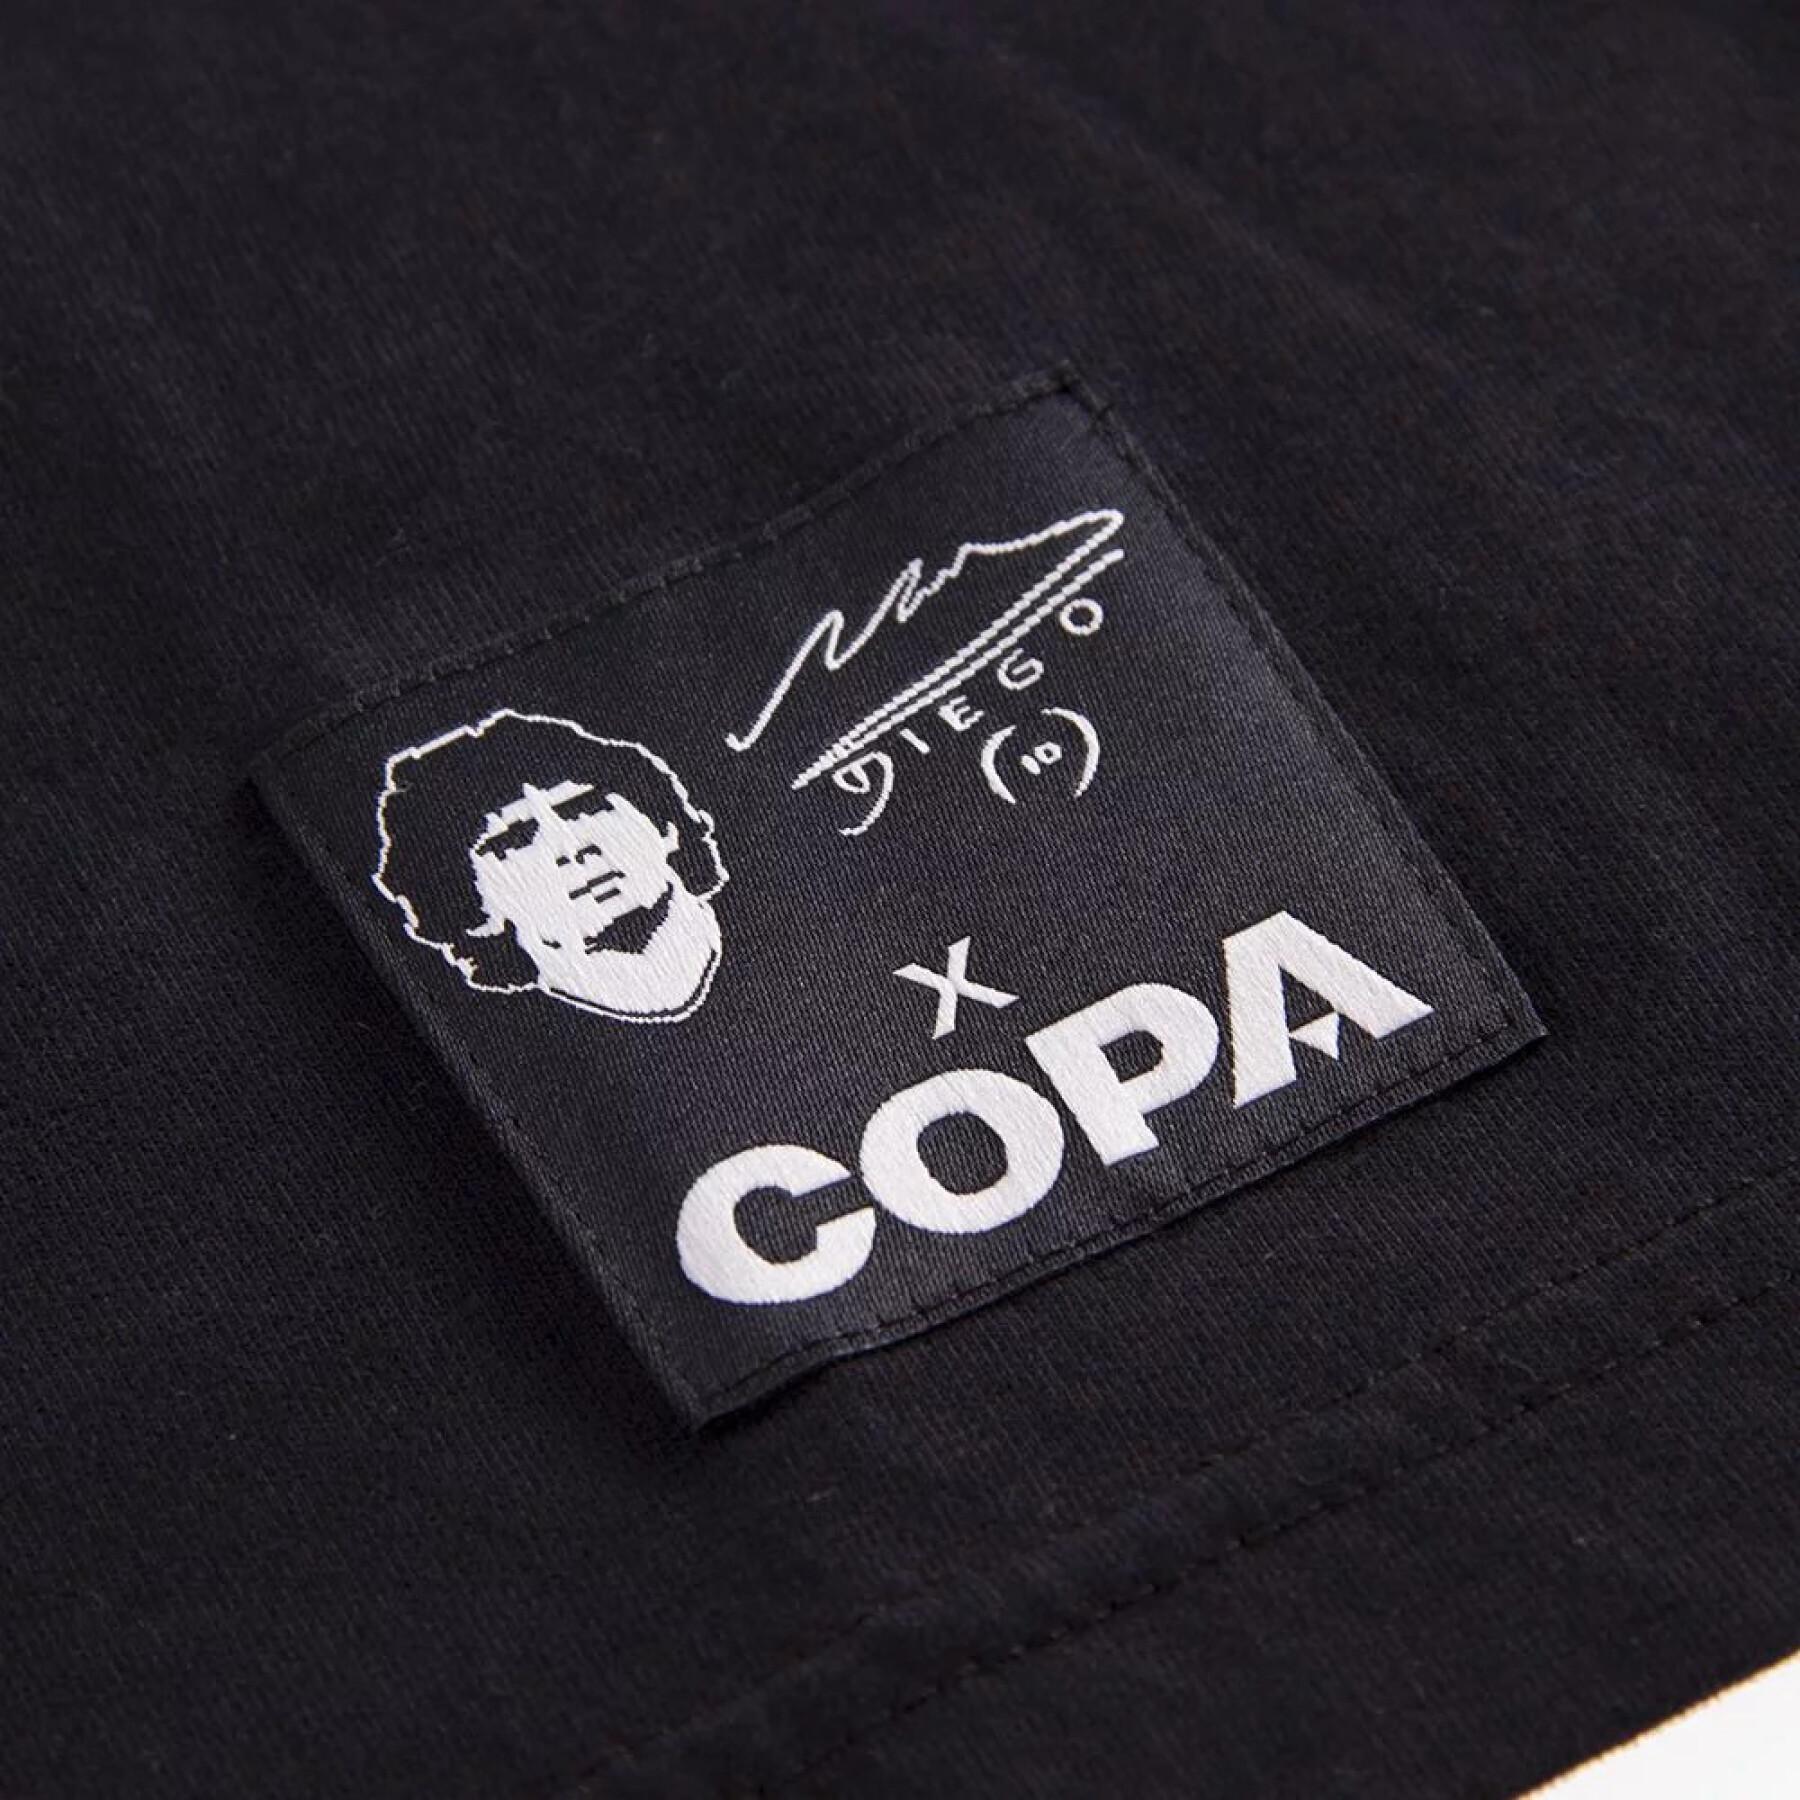 T-shirt Copa Football Maradona World Cup 1986